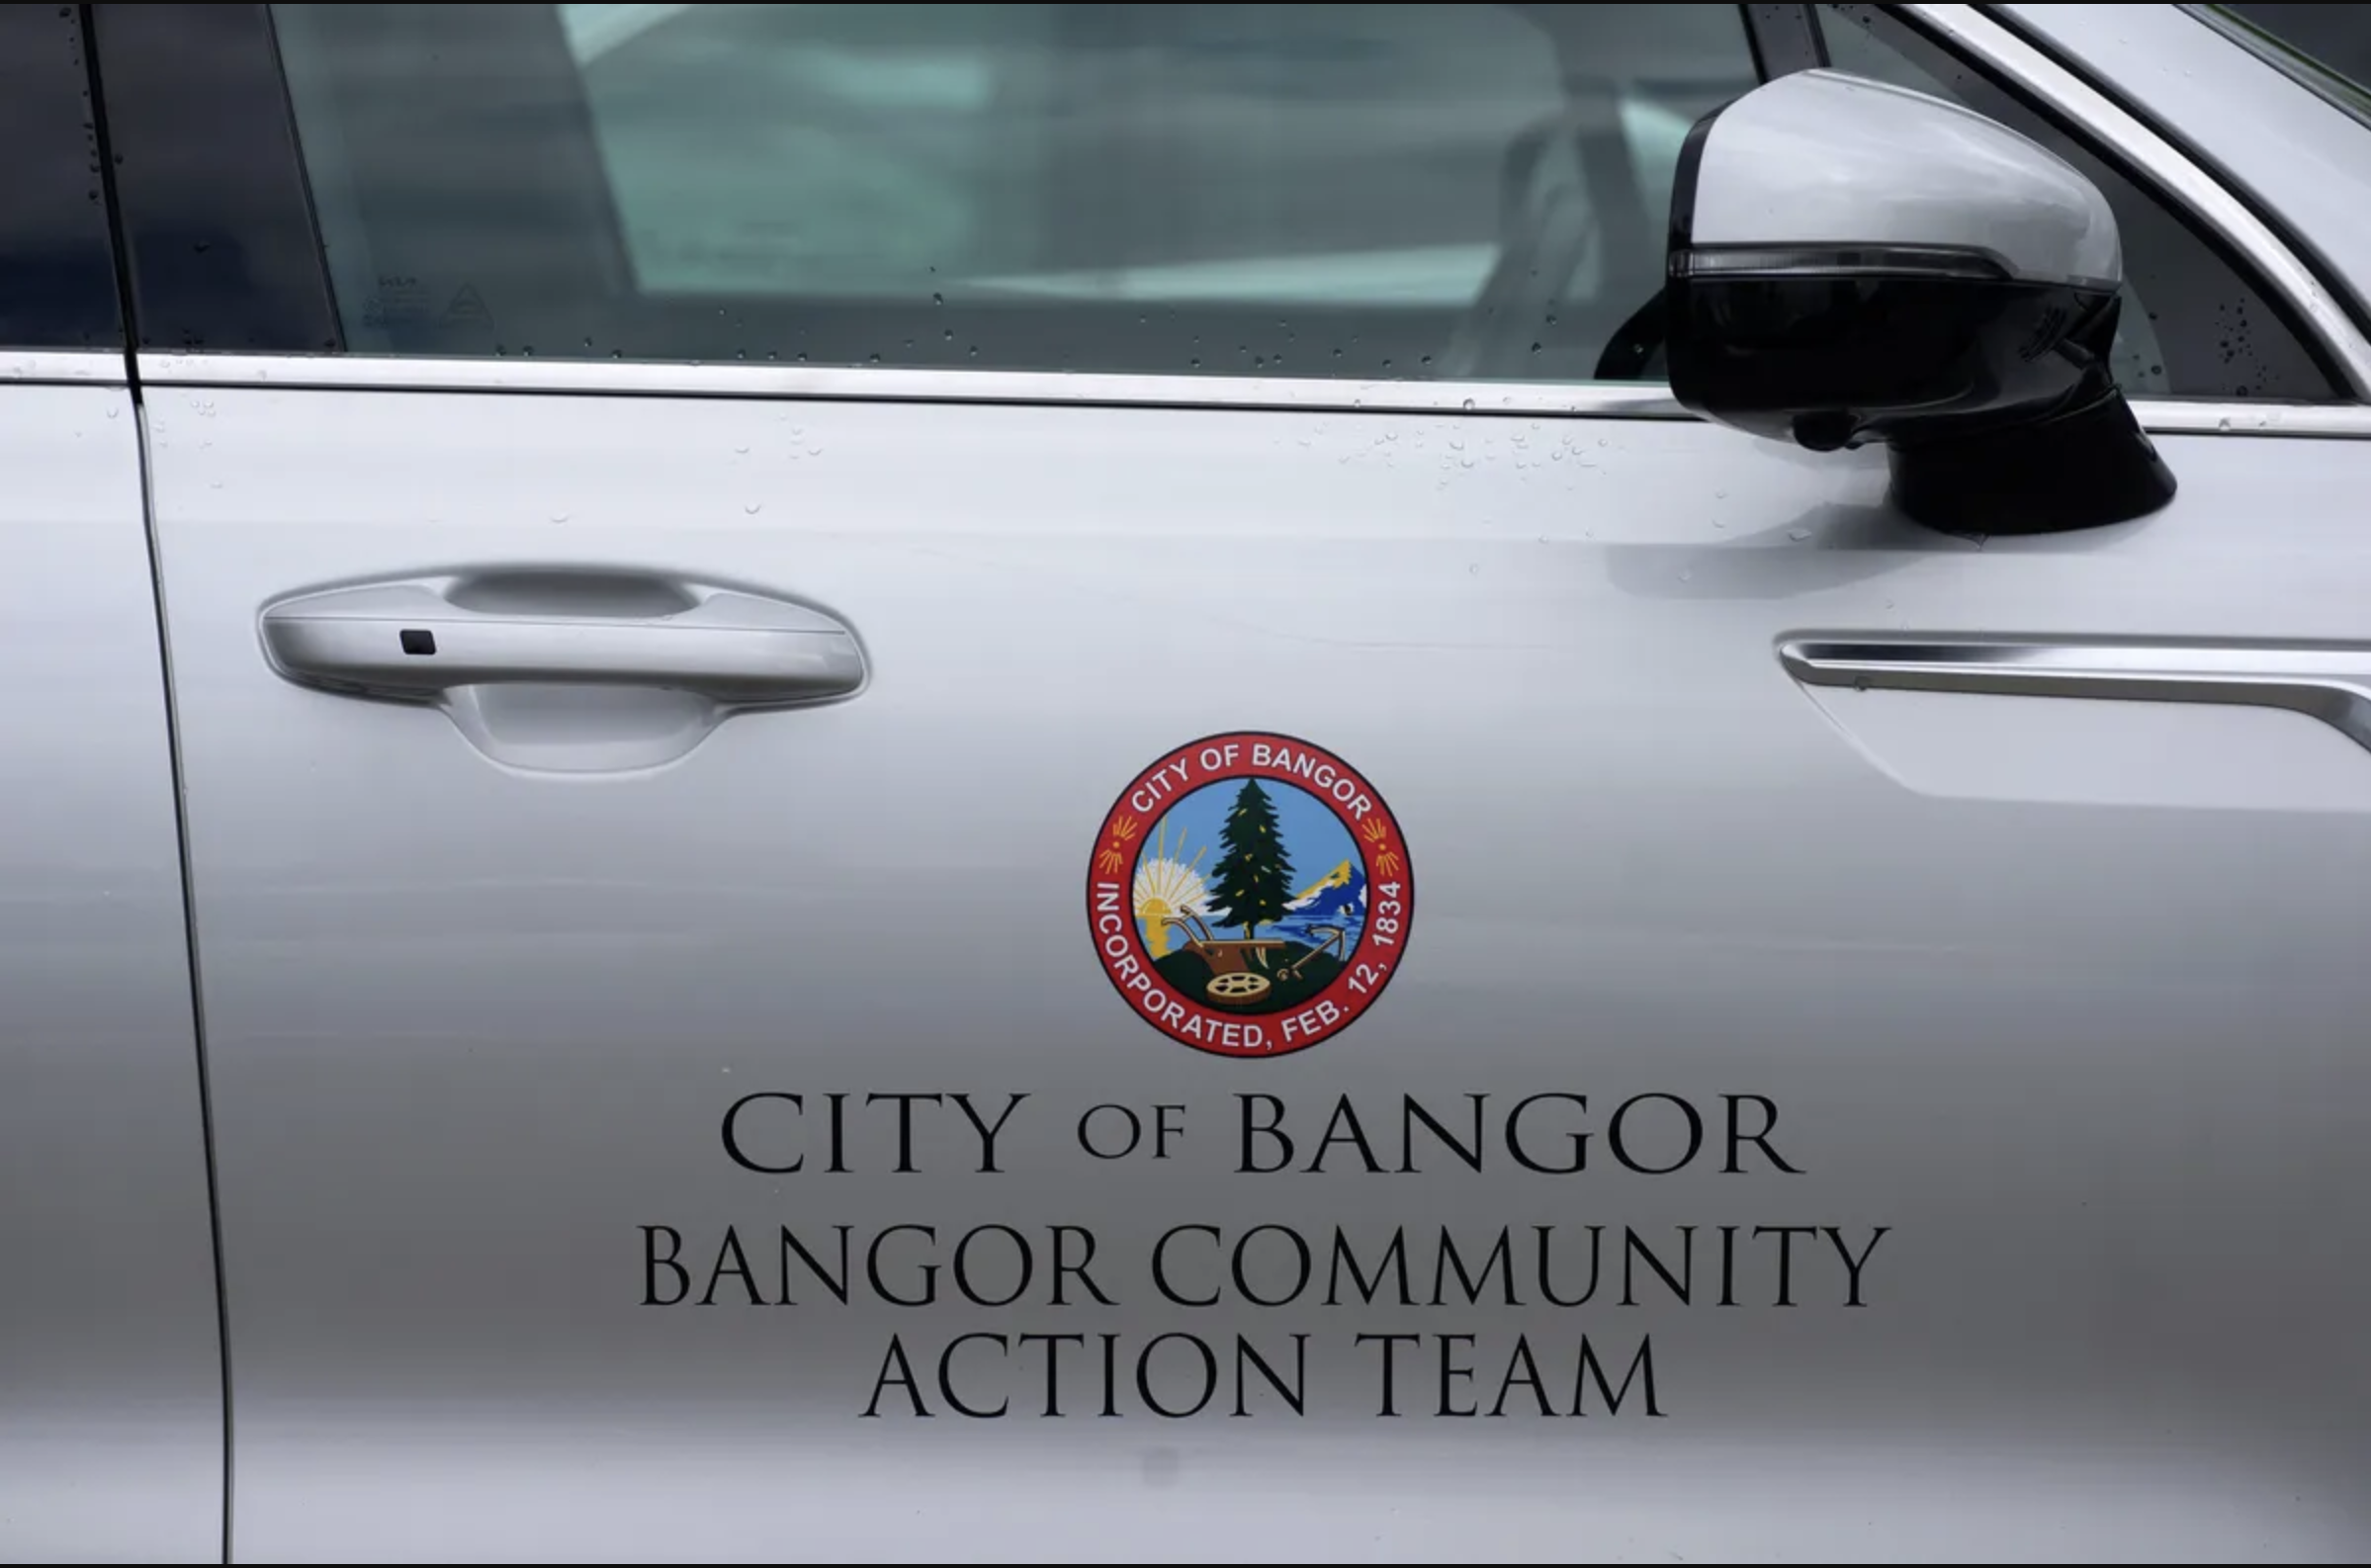 City of Bangor community action team